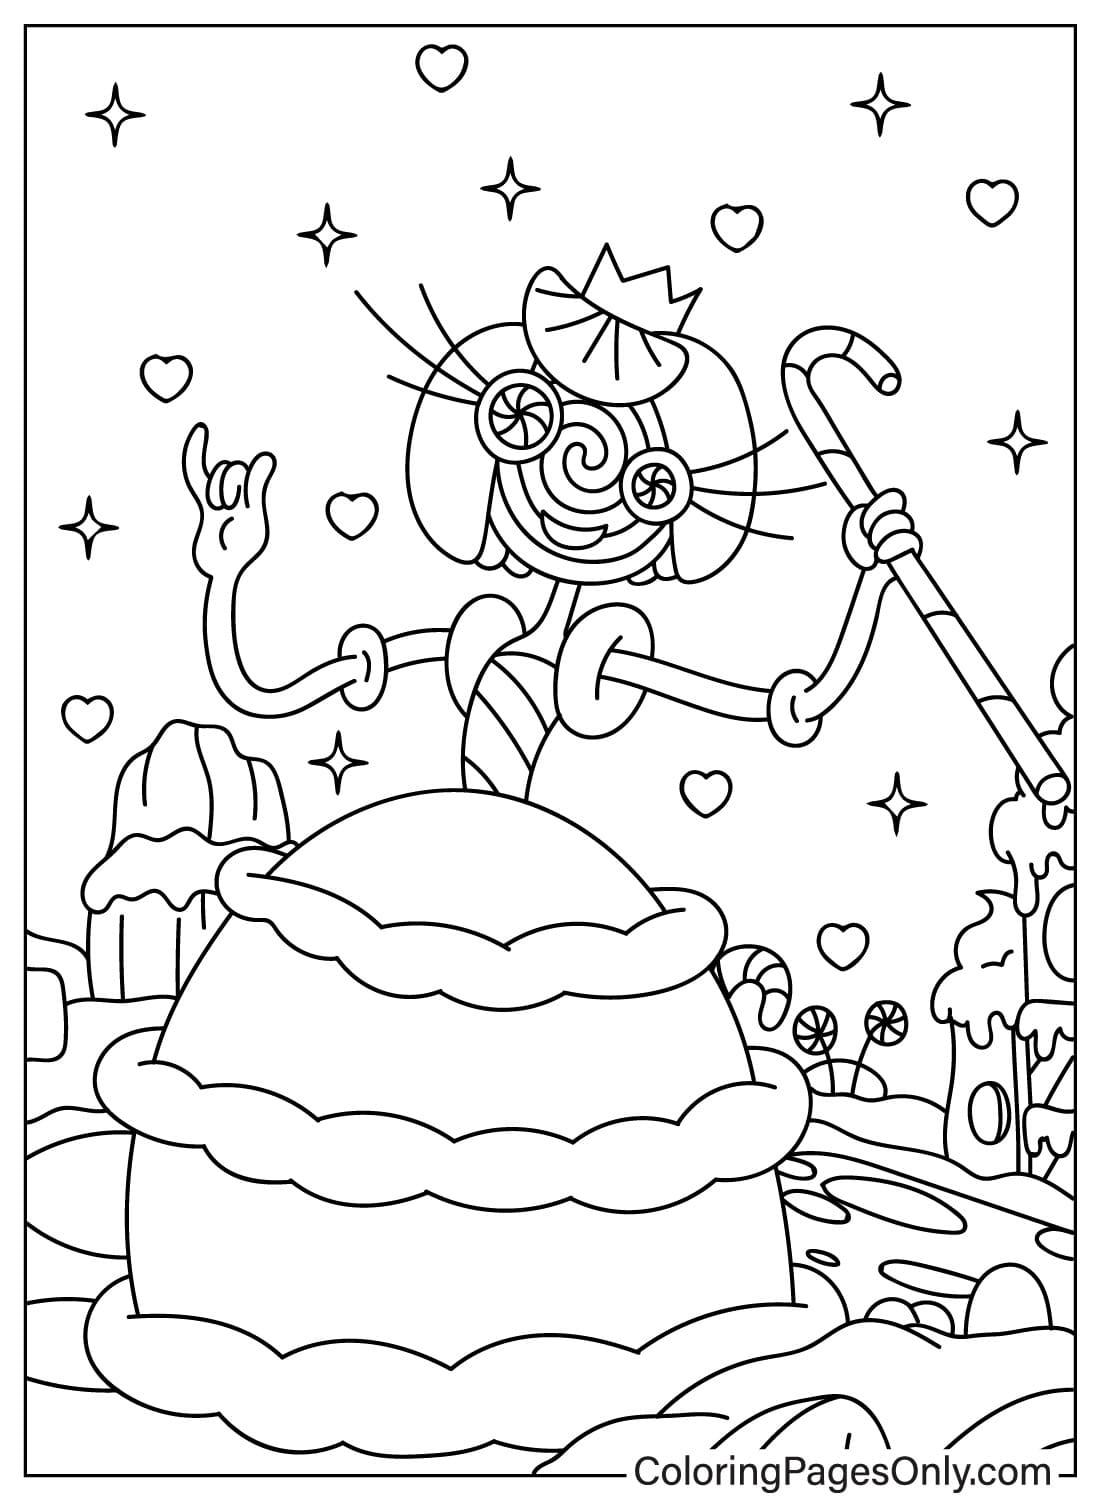 Princess Loolilalu and Candy World Coloring Page from Princess Loolilalu